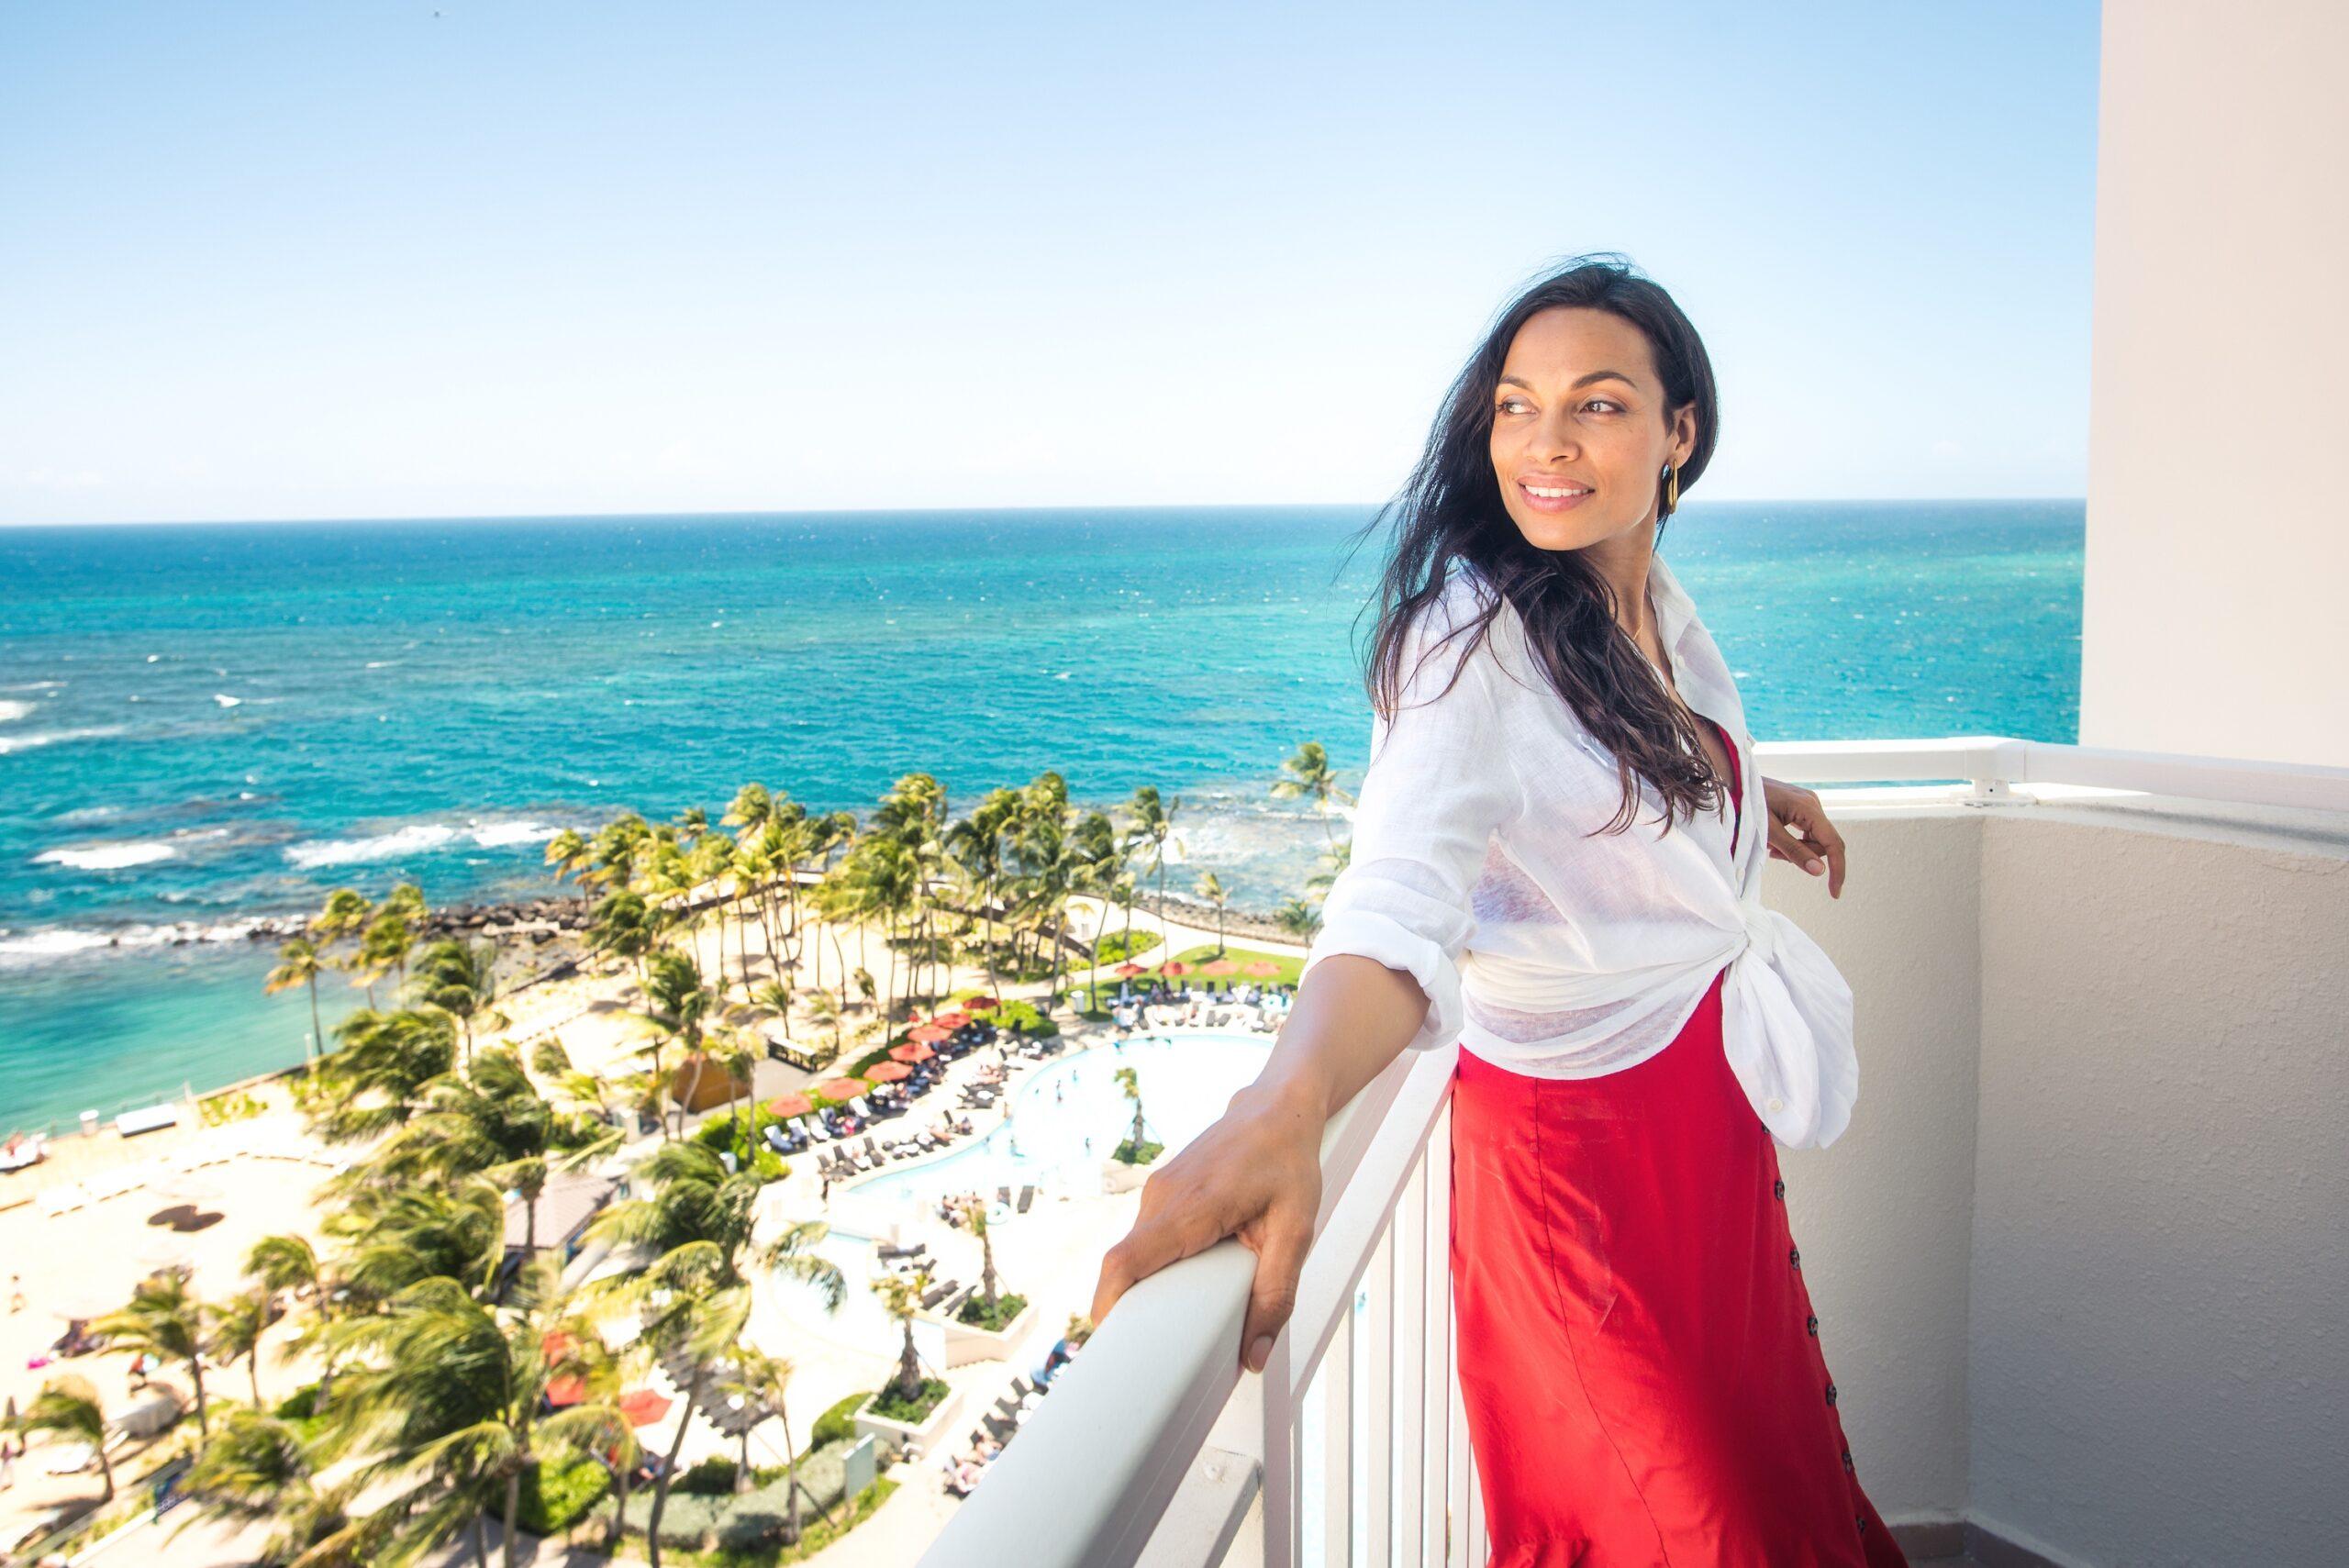 Rosario Dawson takes to the beach for new Hilton campaign to encourage tourism in Puerto Rico